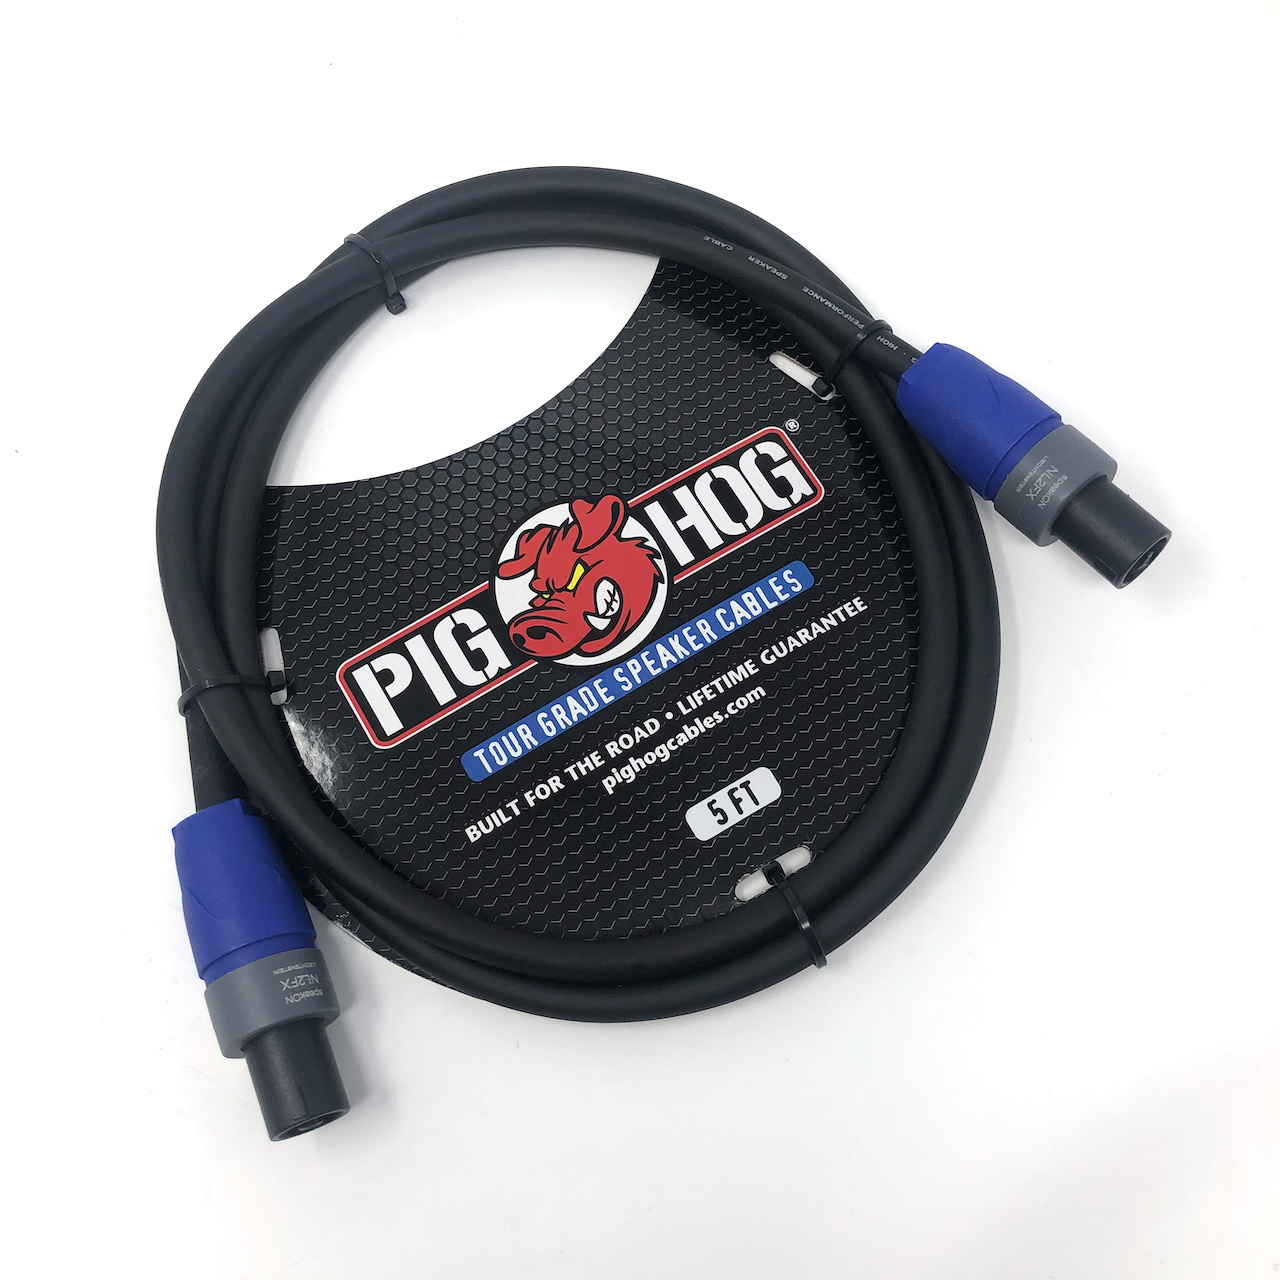 Pig Hog Tour Grade Speaker Cable, 5ft (14 gauge wire), Neutrik Speakon to Speakon, PHSC5SPK